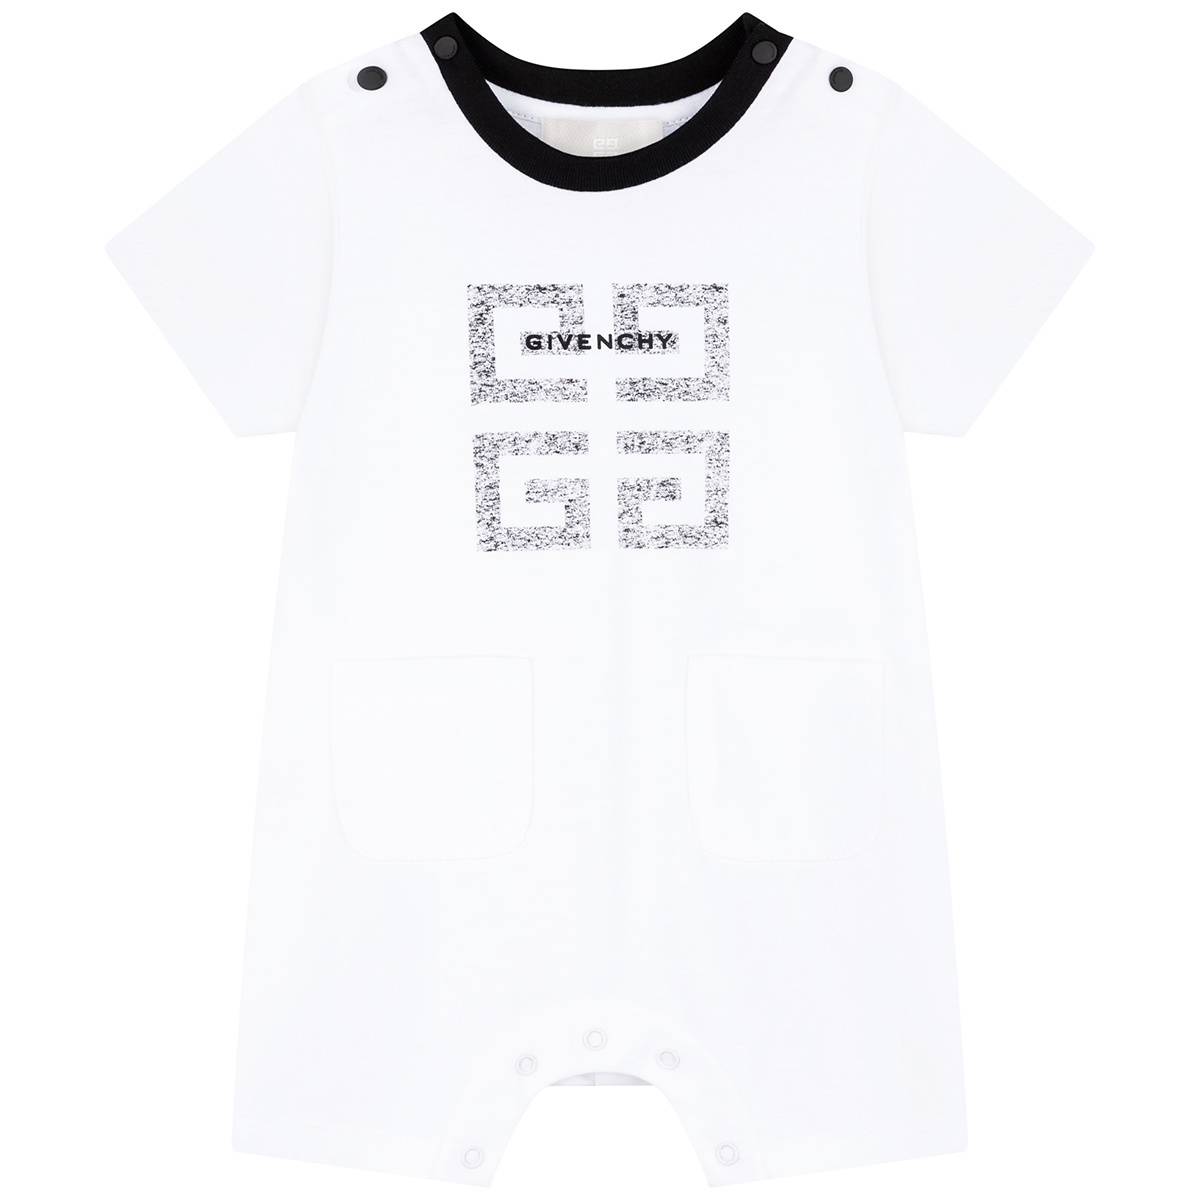 mezelf Bereiken drijvend Givenchy wit babypakje met logo - Lolly Pop Kindermode